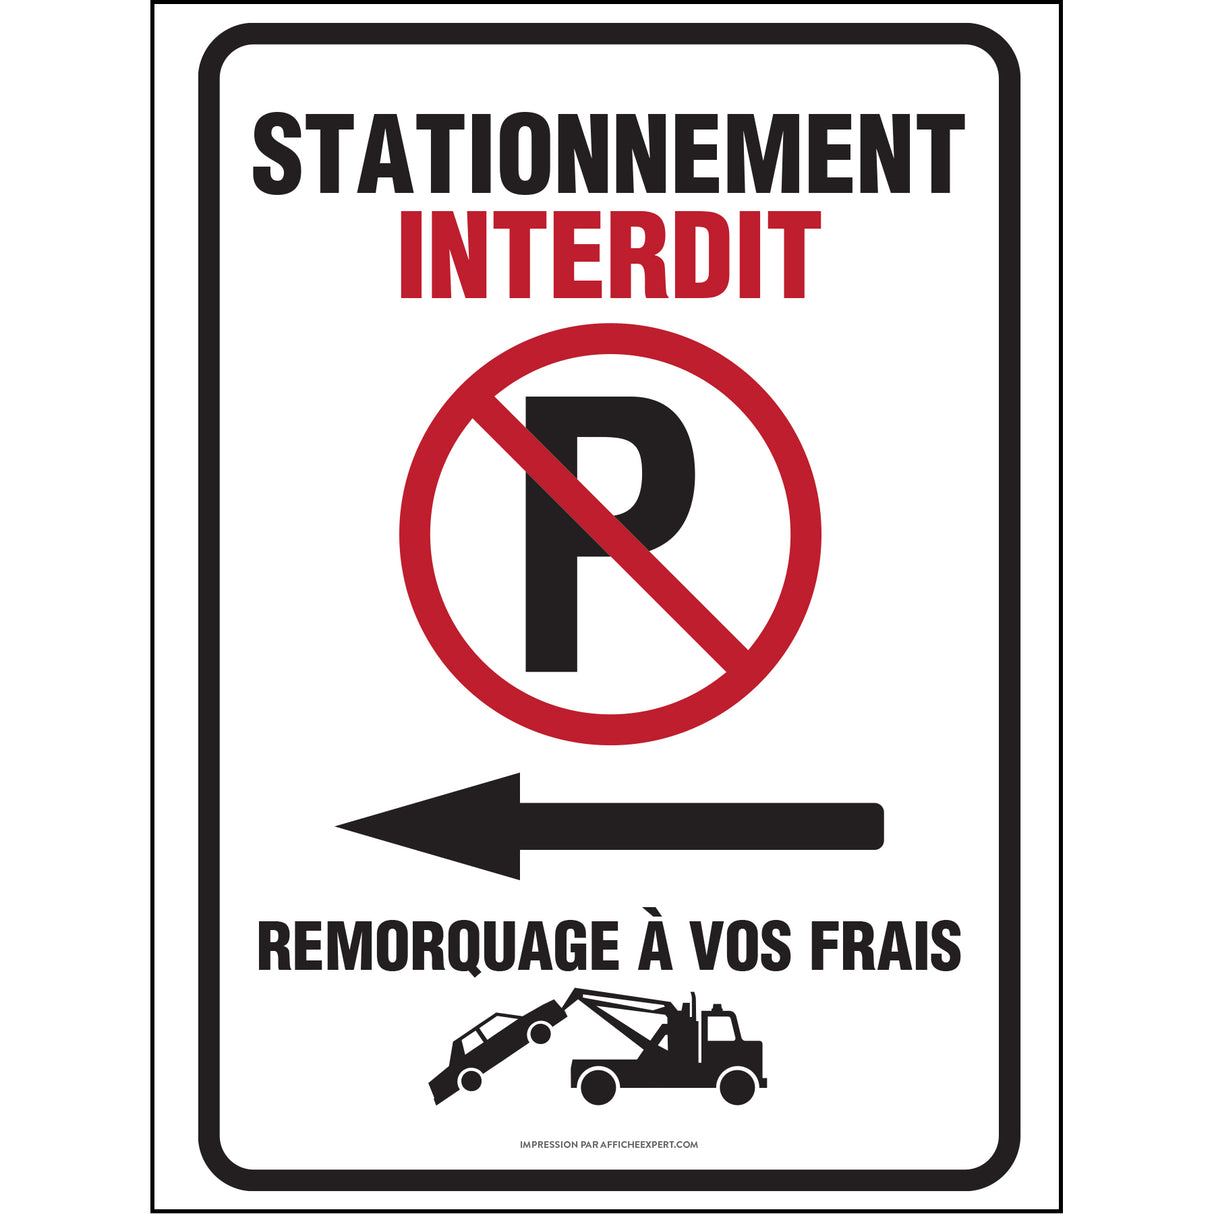 Stationnement interdit - Remorquage à vos frais (Flèche gauche)